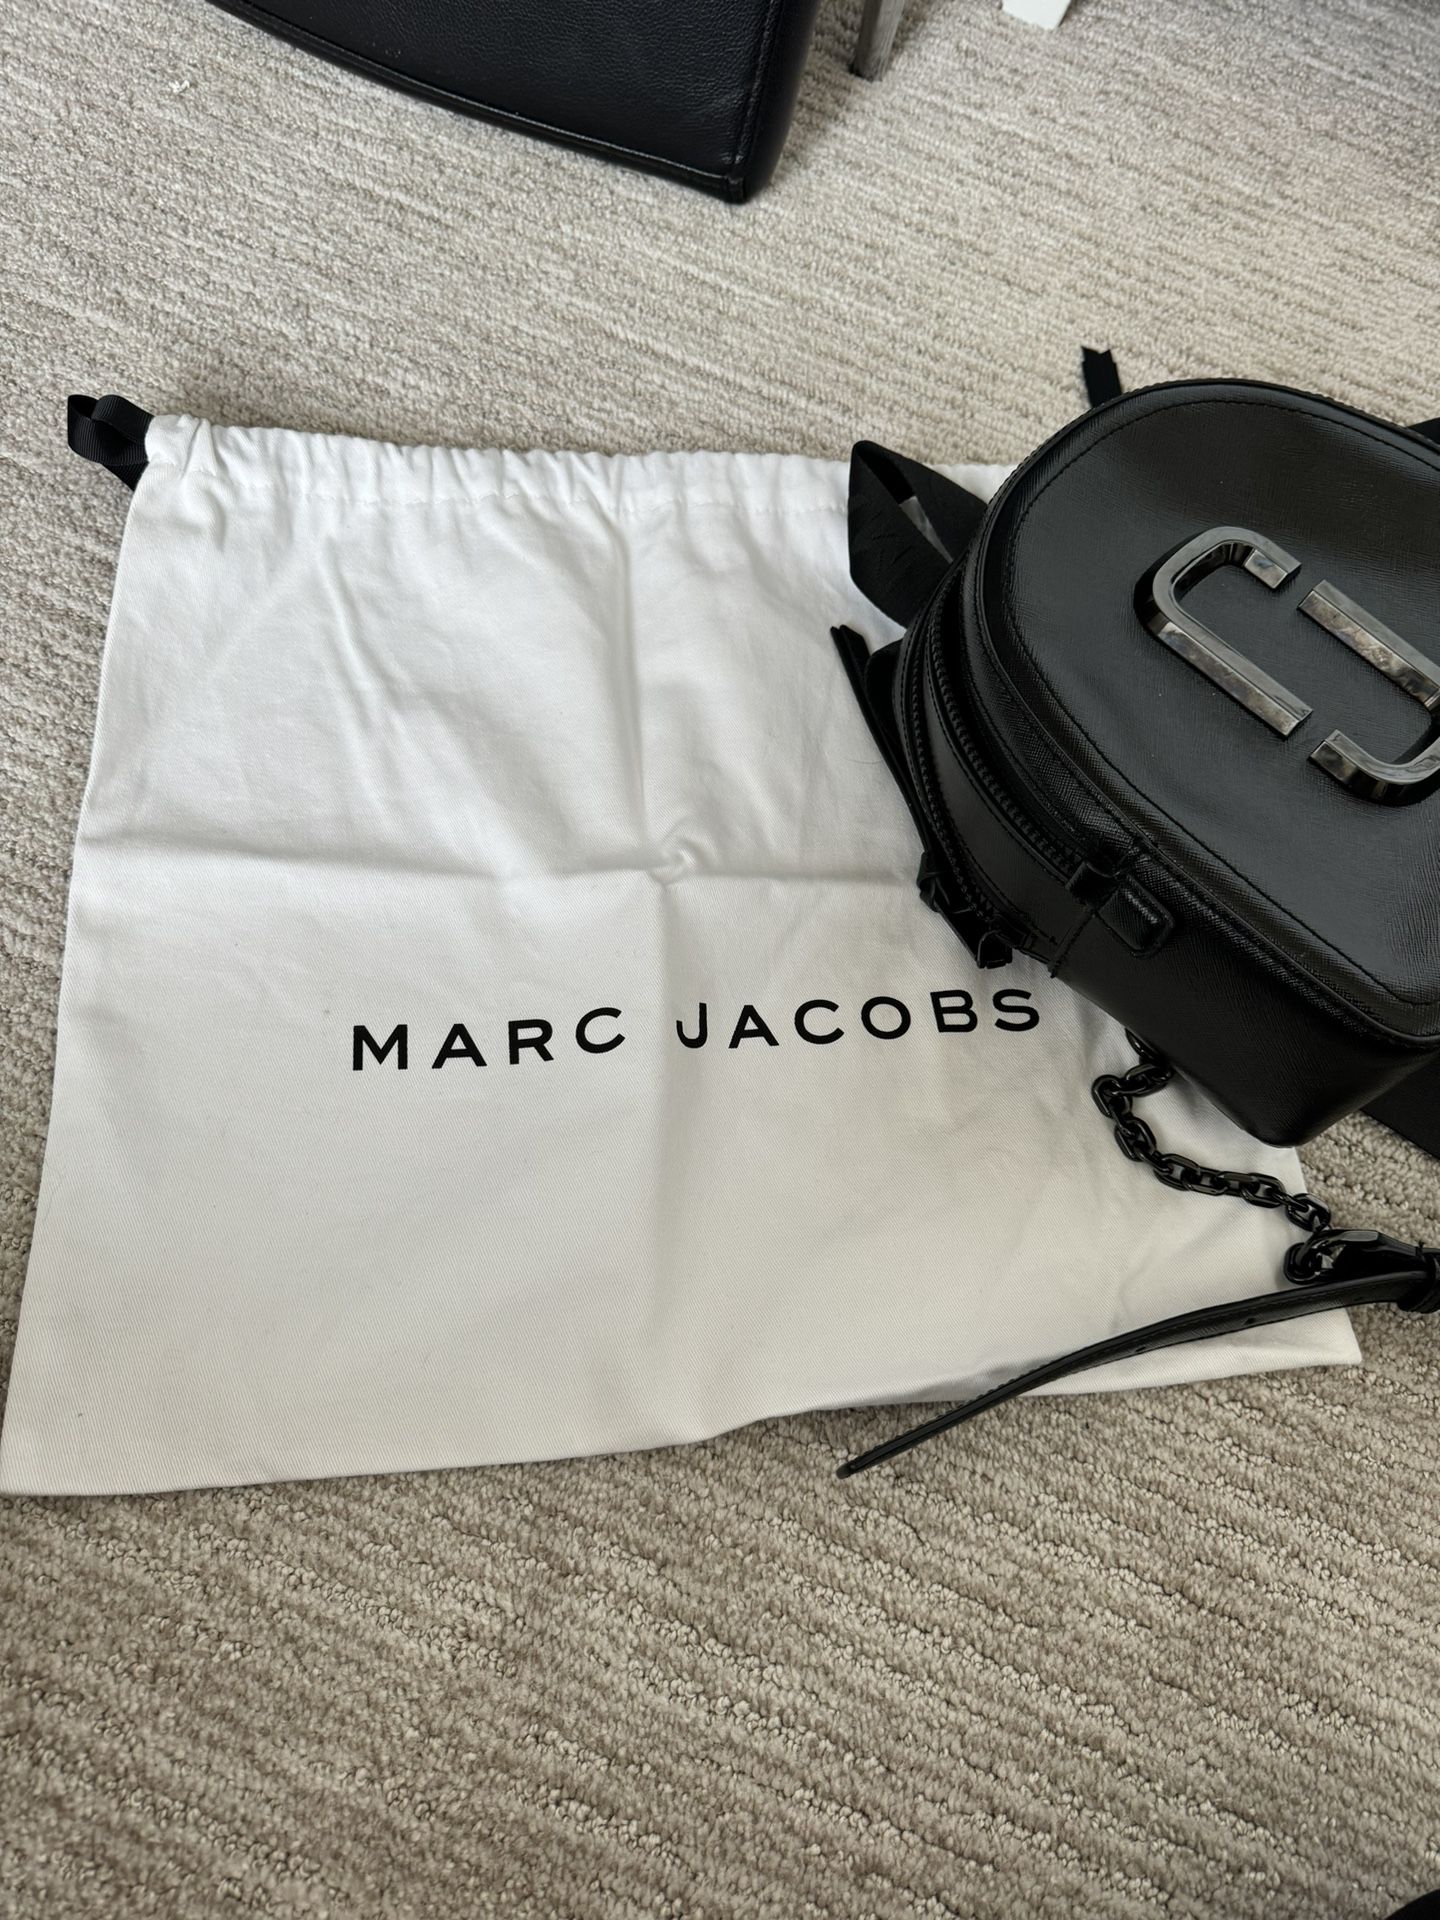 Marc Jacob’s backpack Black